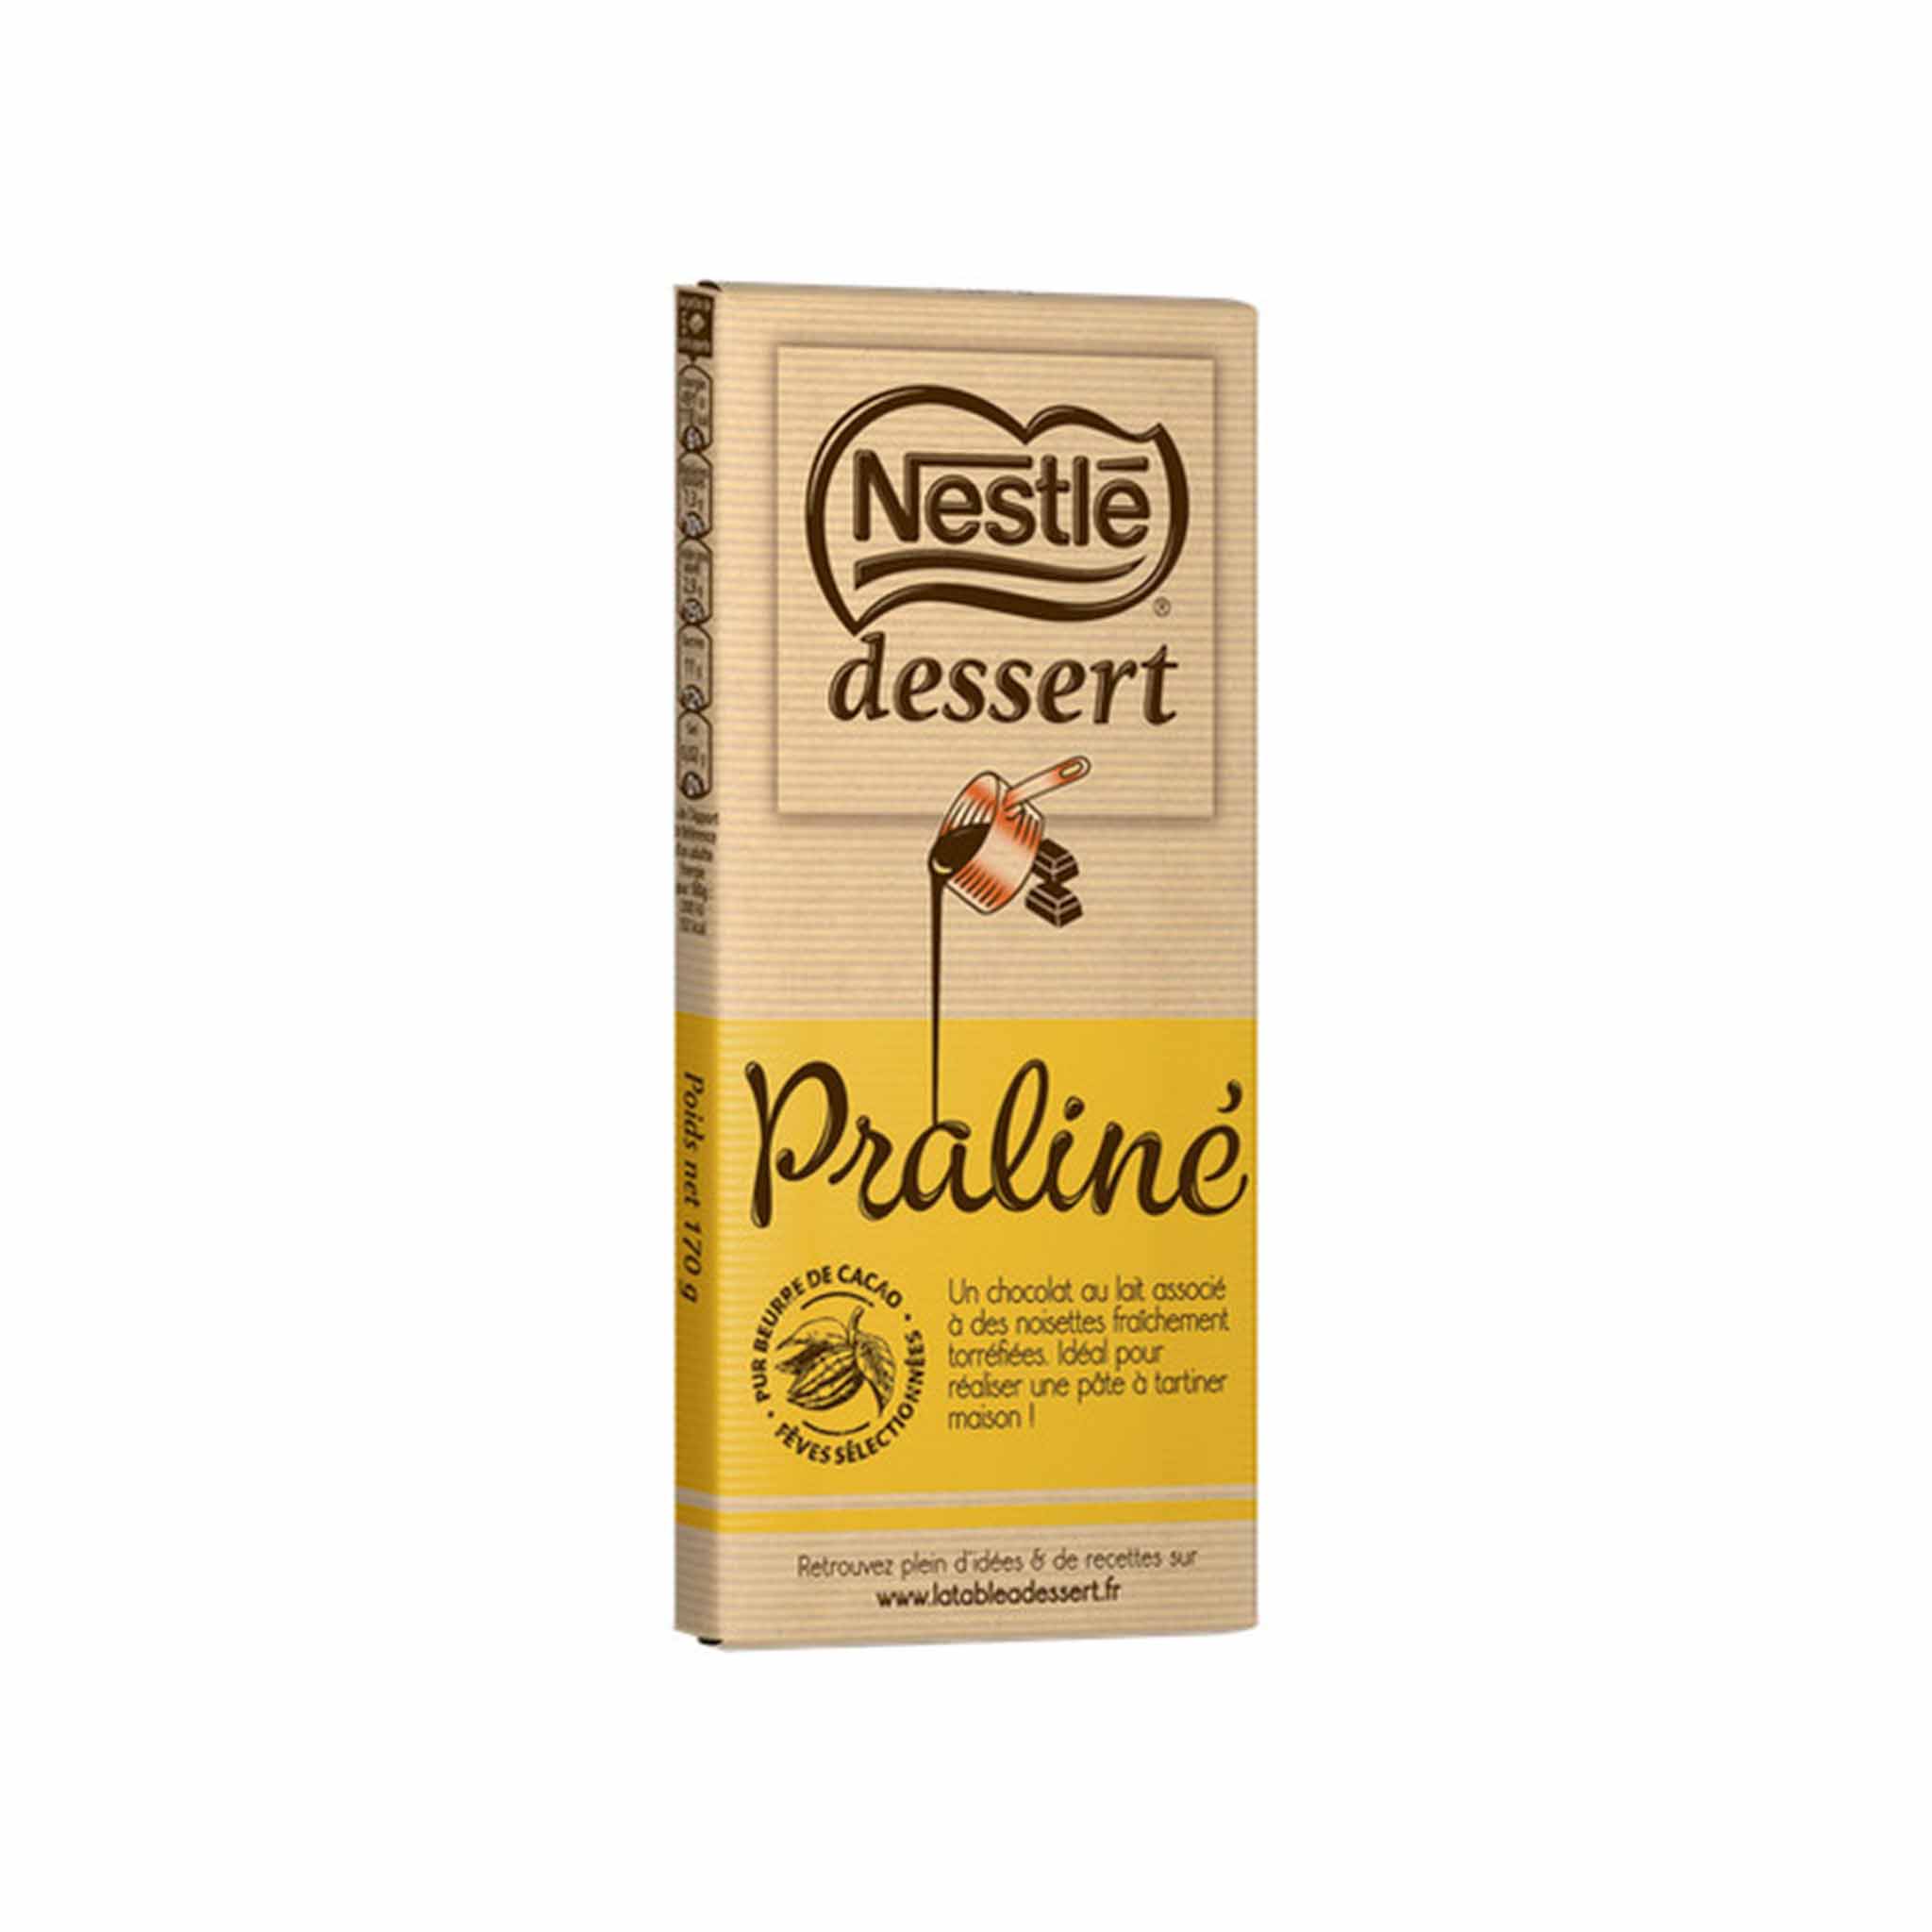 NESTLE DESSERT PRALINE CHOCOLATE BAR 170g